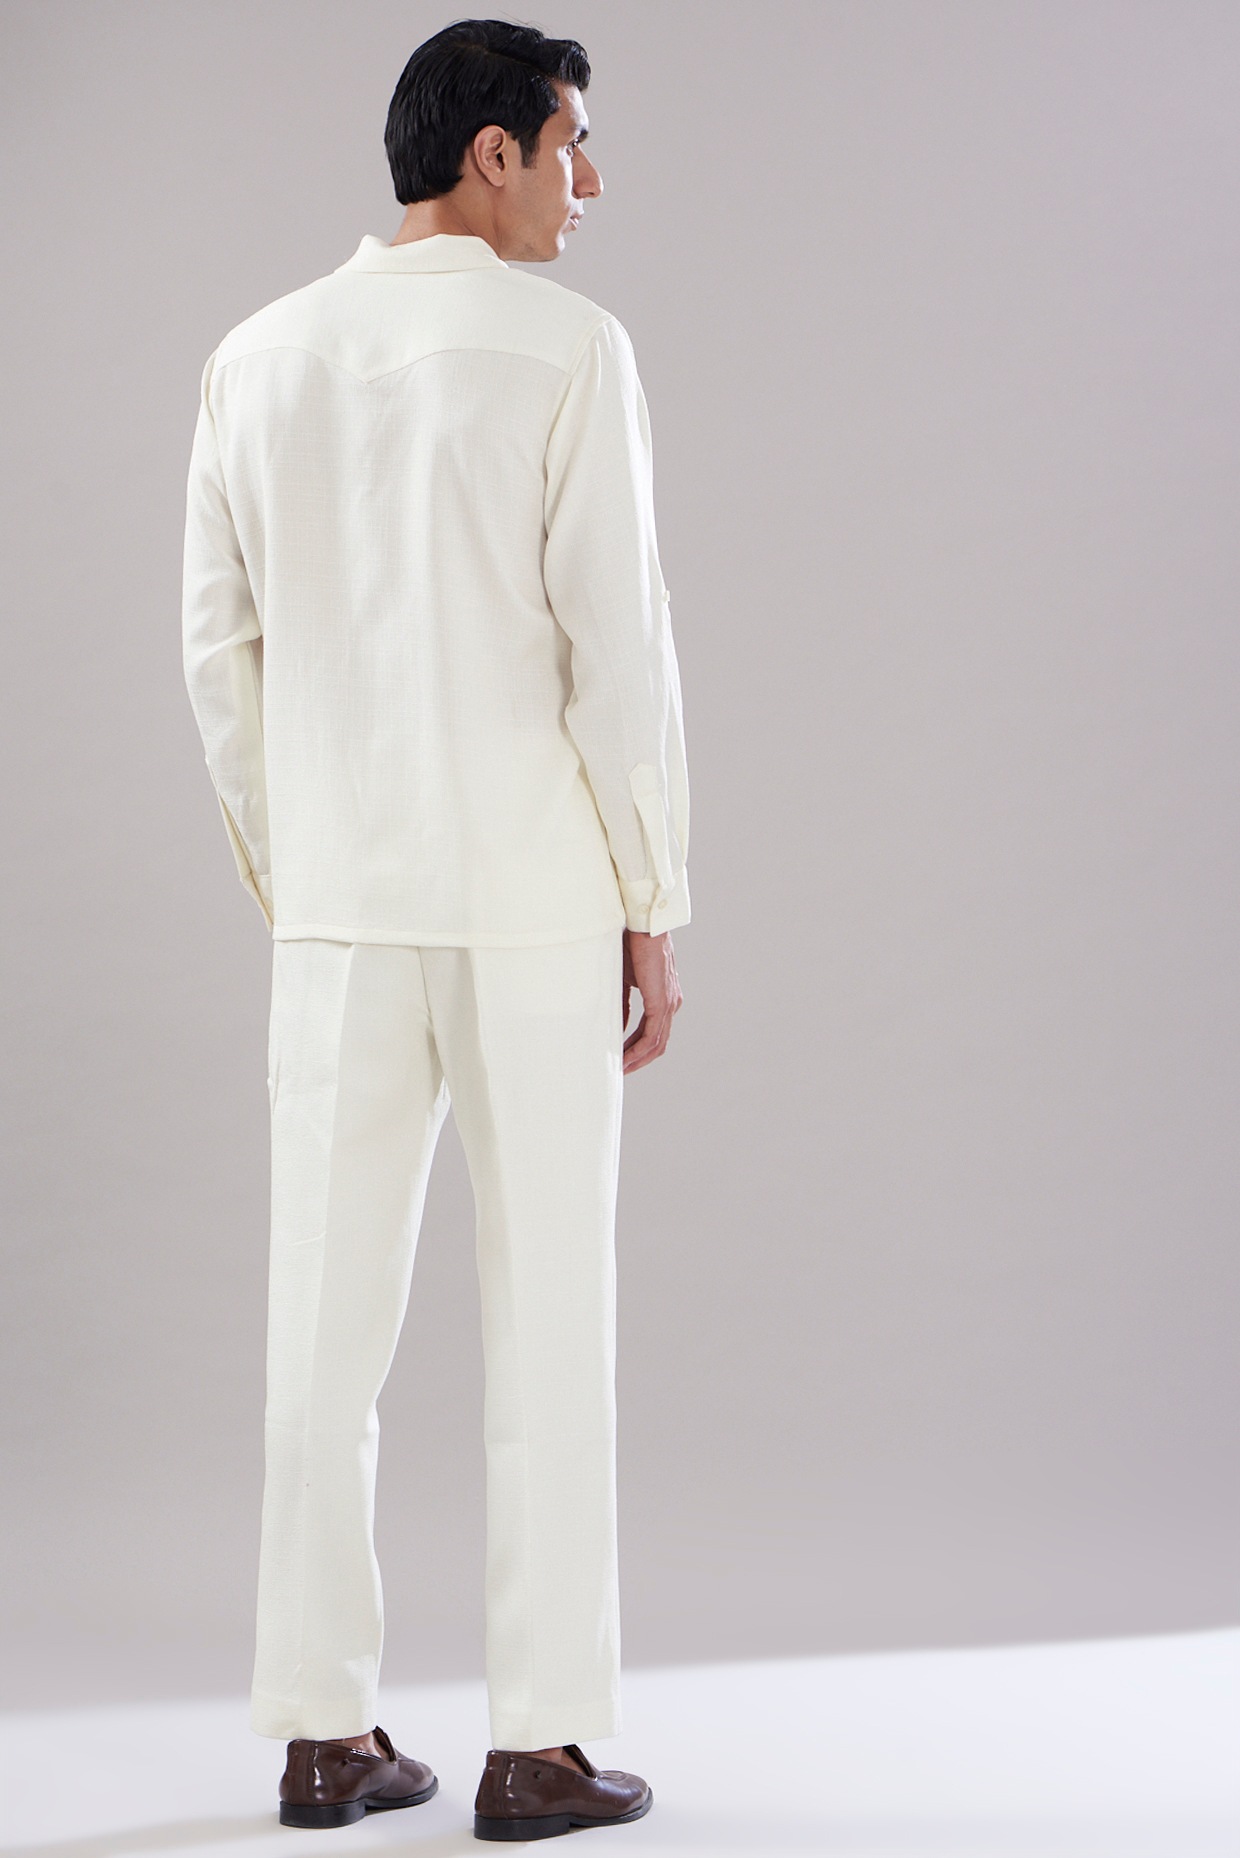 Buy White linen pants Designer Wear  Ensemble